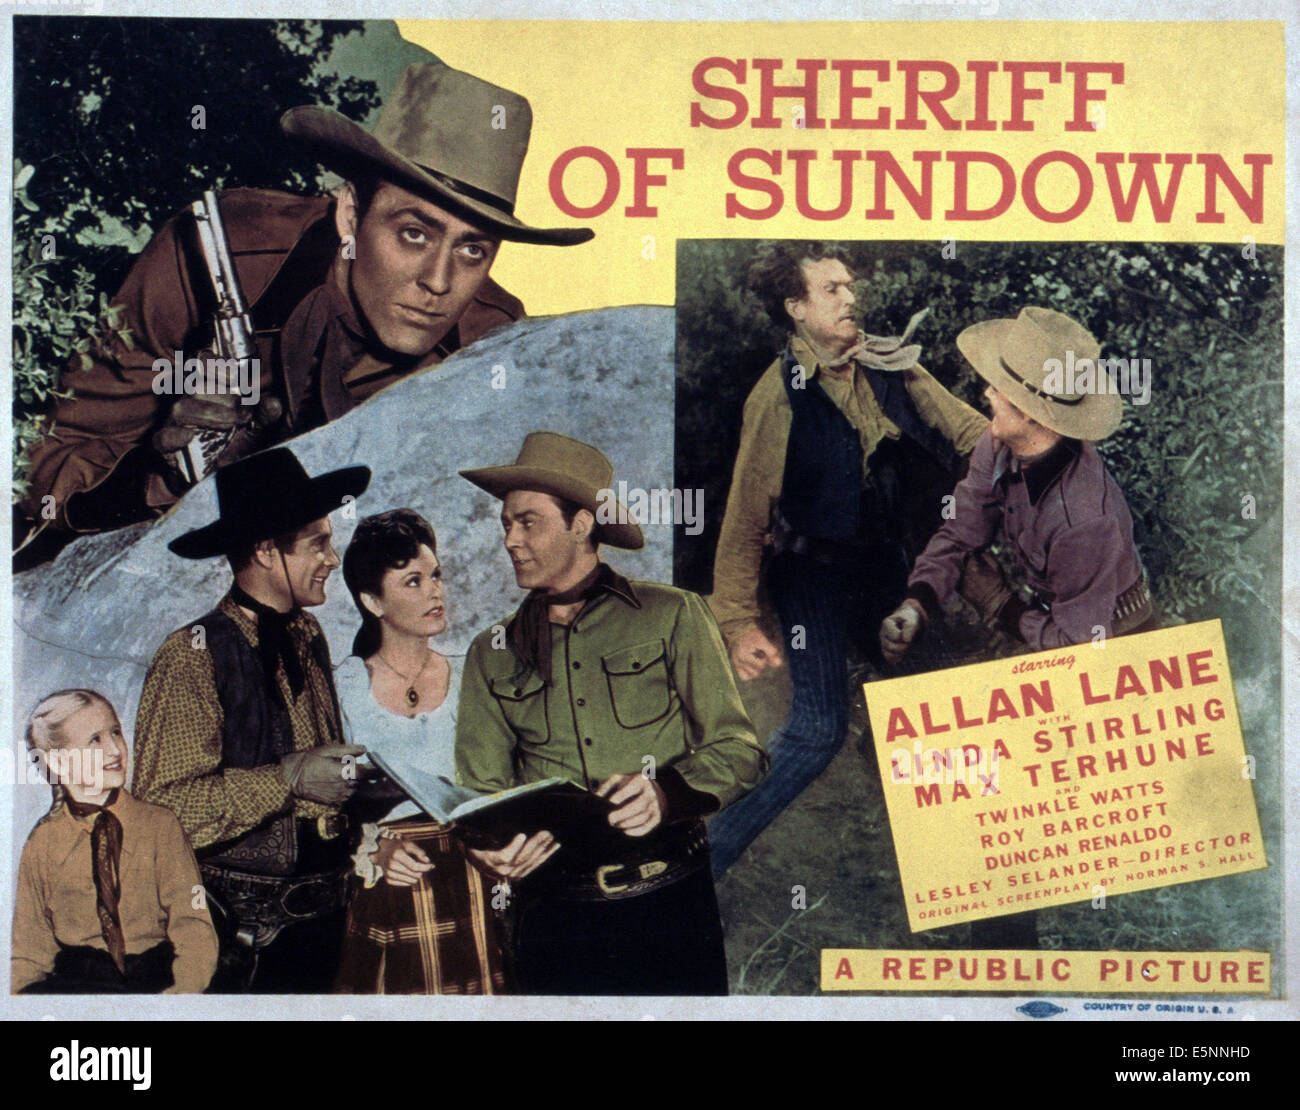 SHERIFF OF SUNDOWN, US poster, Allan Lane (top), bottom from left: Twinkle Watts, Duncan Renaldo, Linda Sterling, Allan Lane, Stock Photo